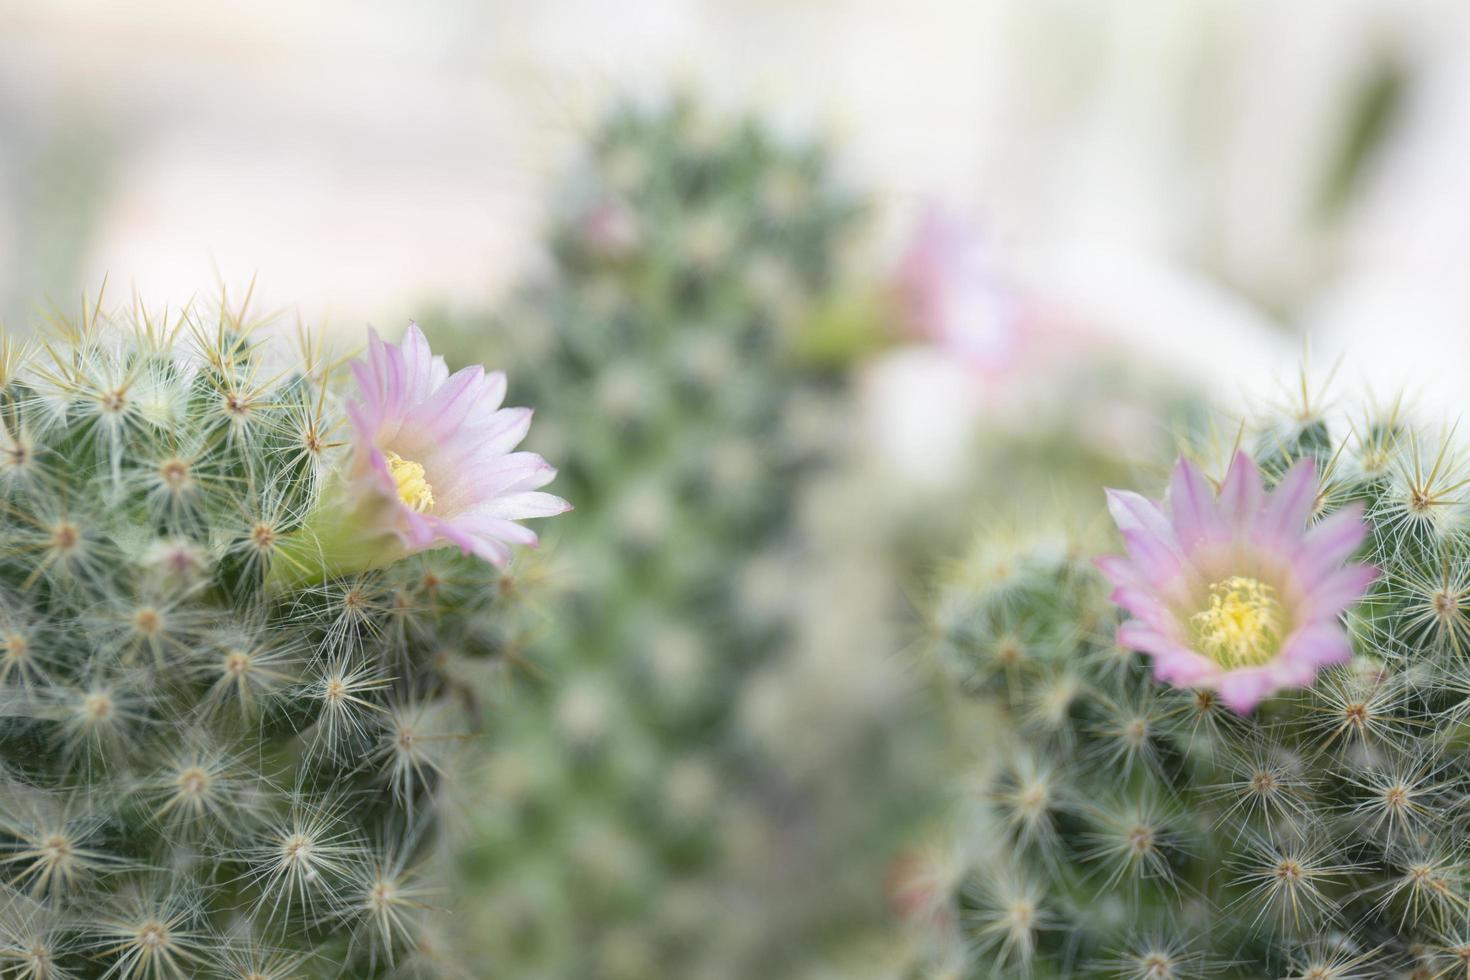 Cactus flowers in the garden. photo